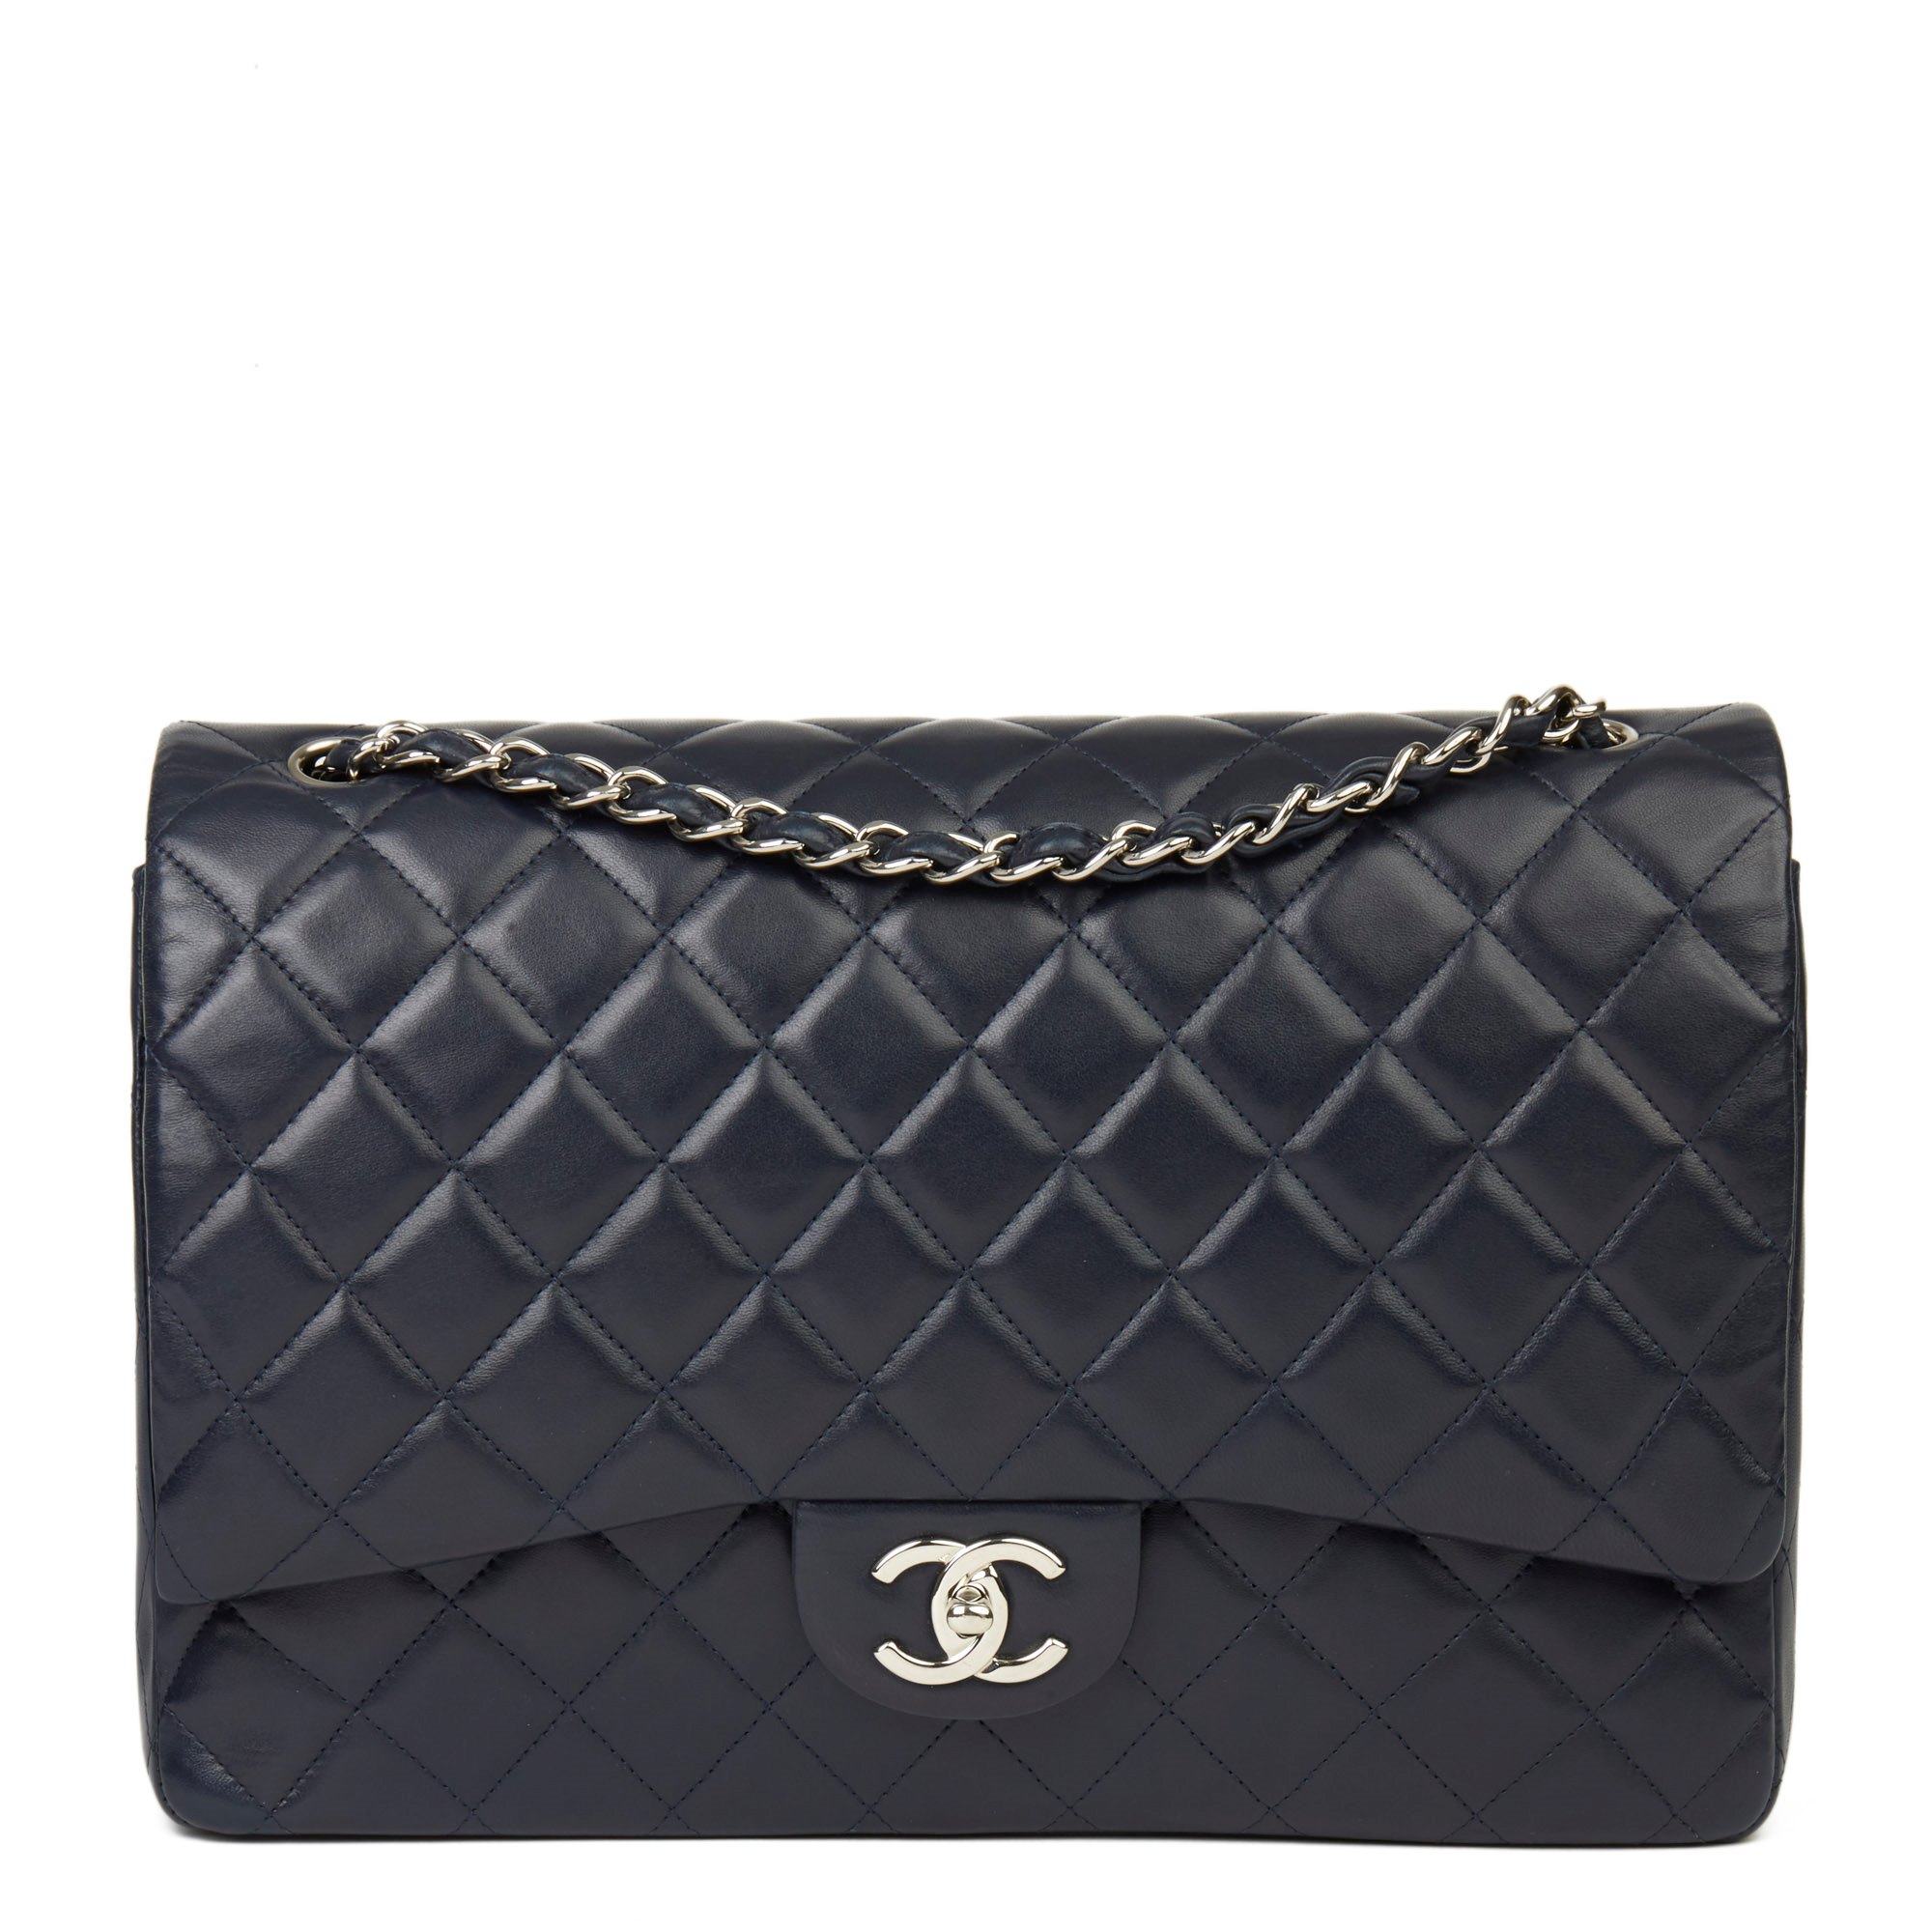 Chanel Maxi Classic Double Flap Bag 2011 HB3290 | Second Hand Handbags